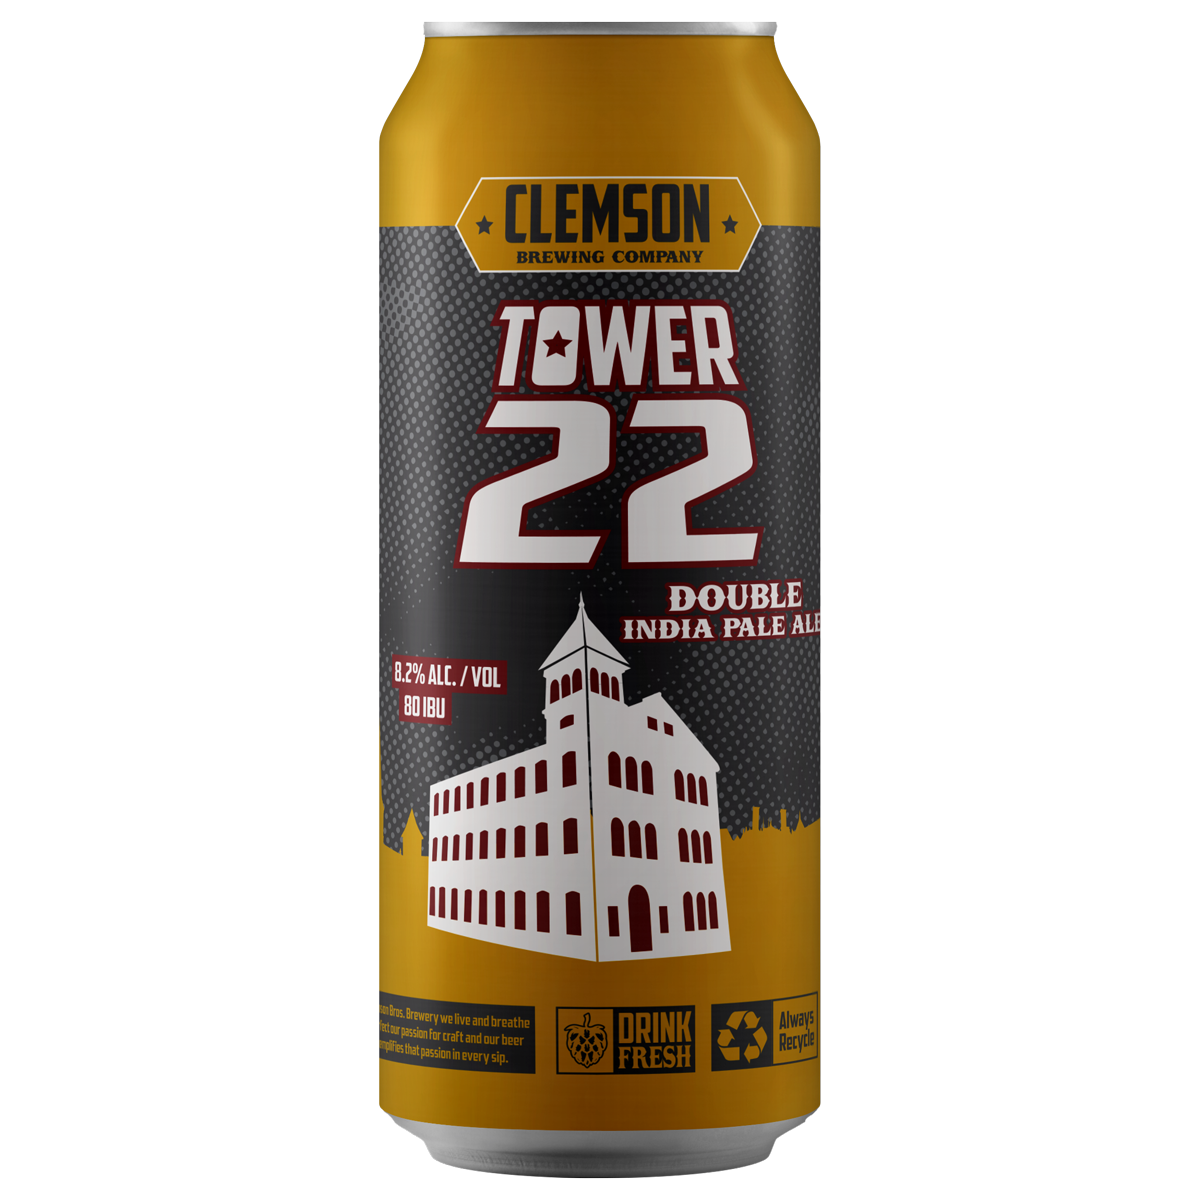 Clemson Bros. Brewery Tower 22